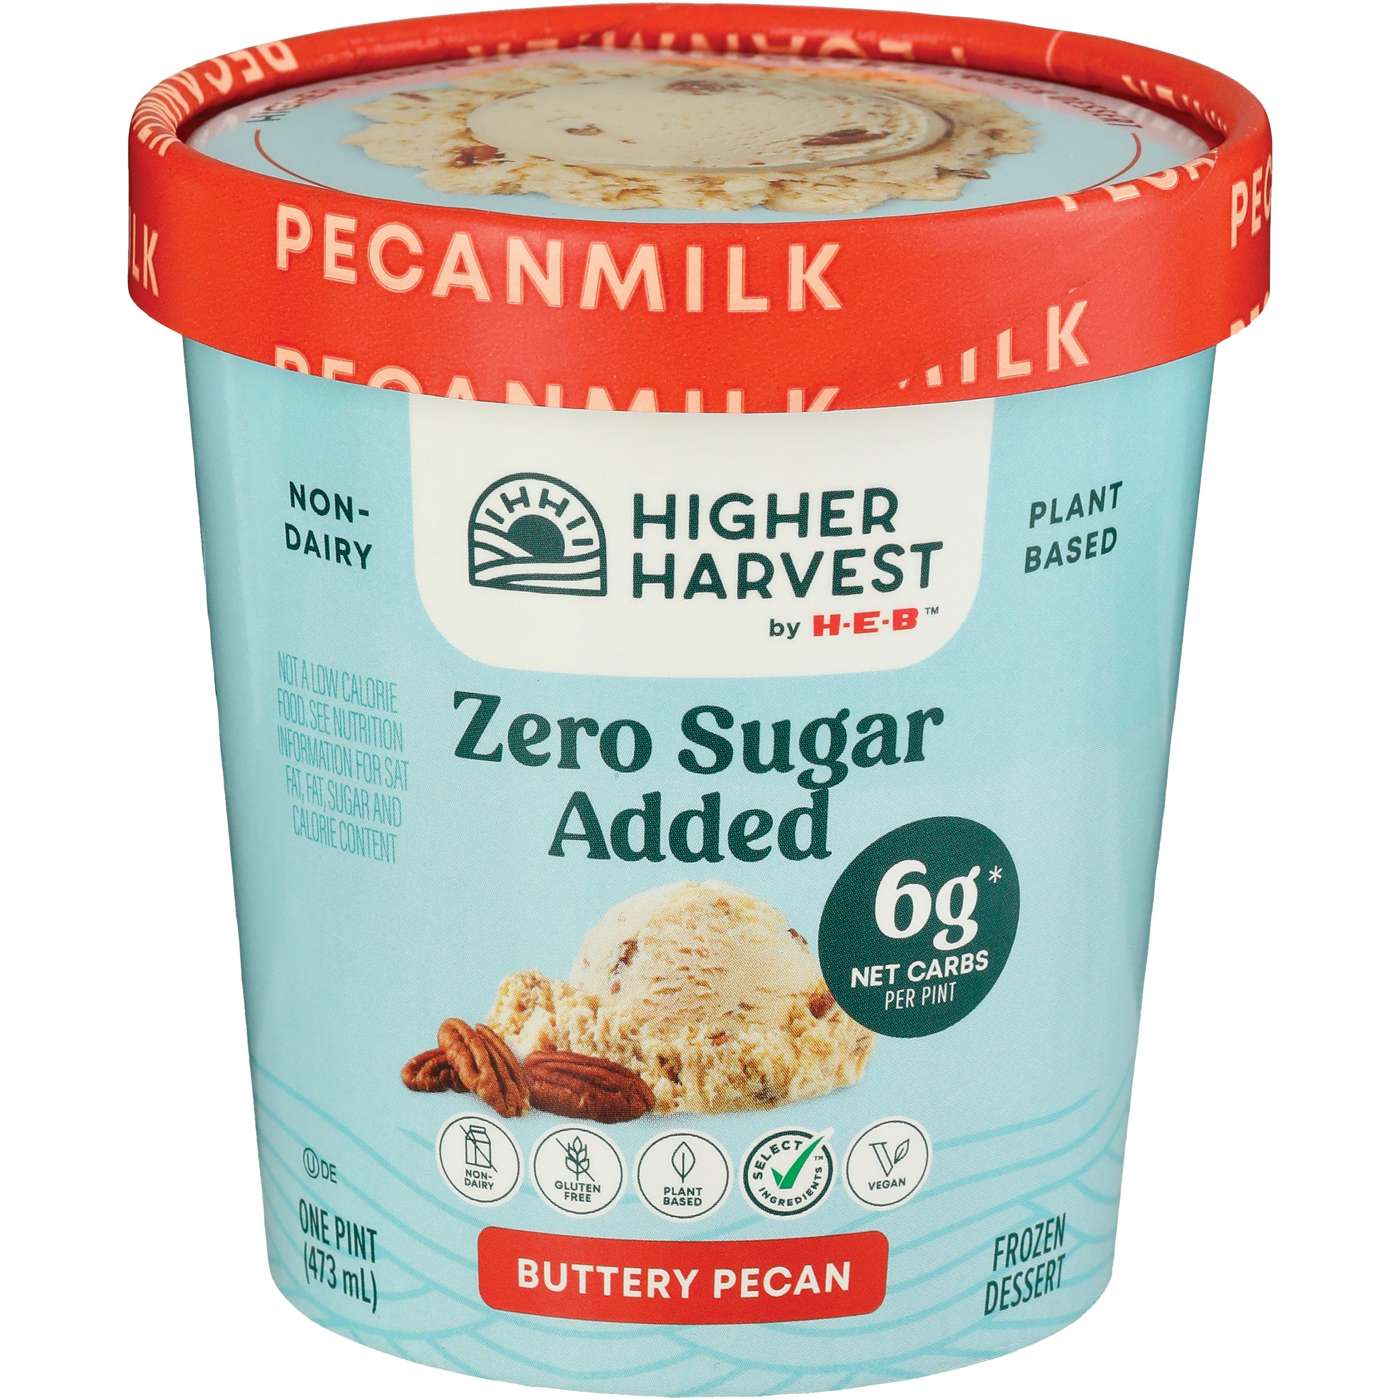 Higher Harvest by H-E-B Zero Sugar Added Non-Dairy Frozen Dessert - Buttery Pecan; image 1 of 2